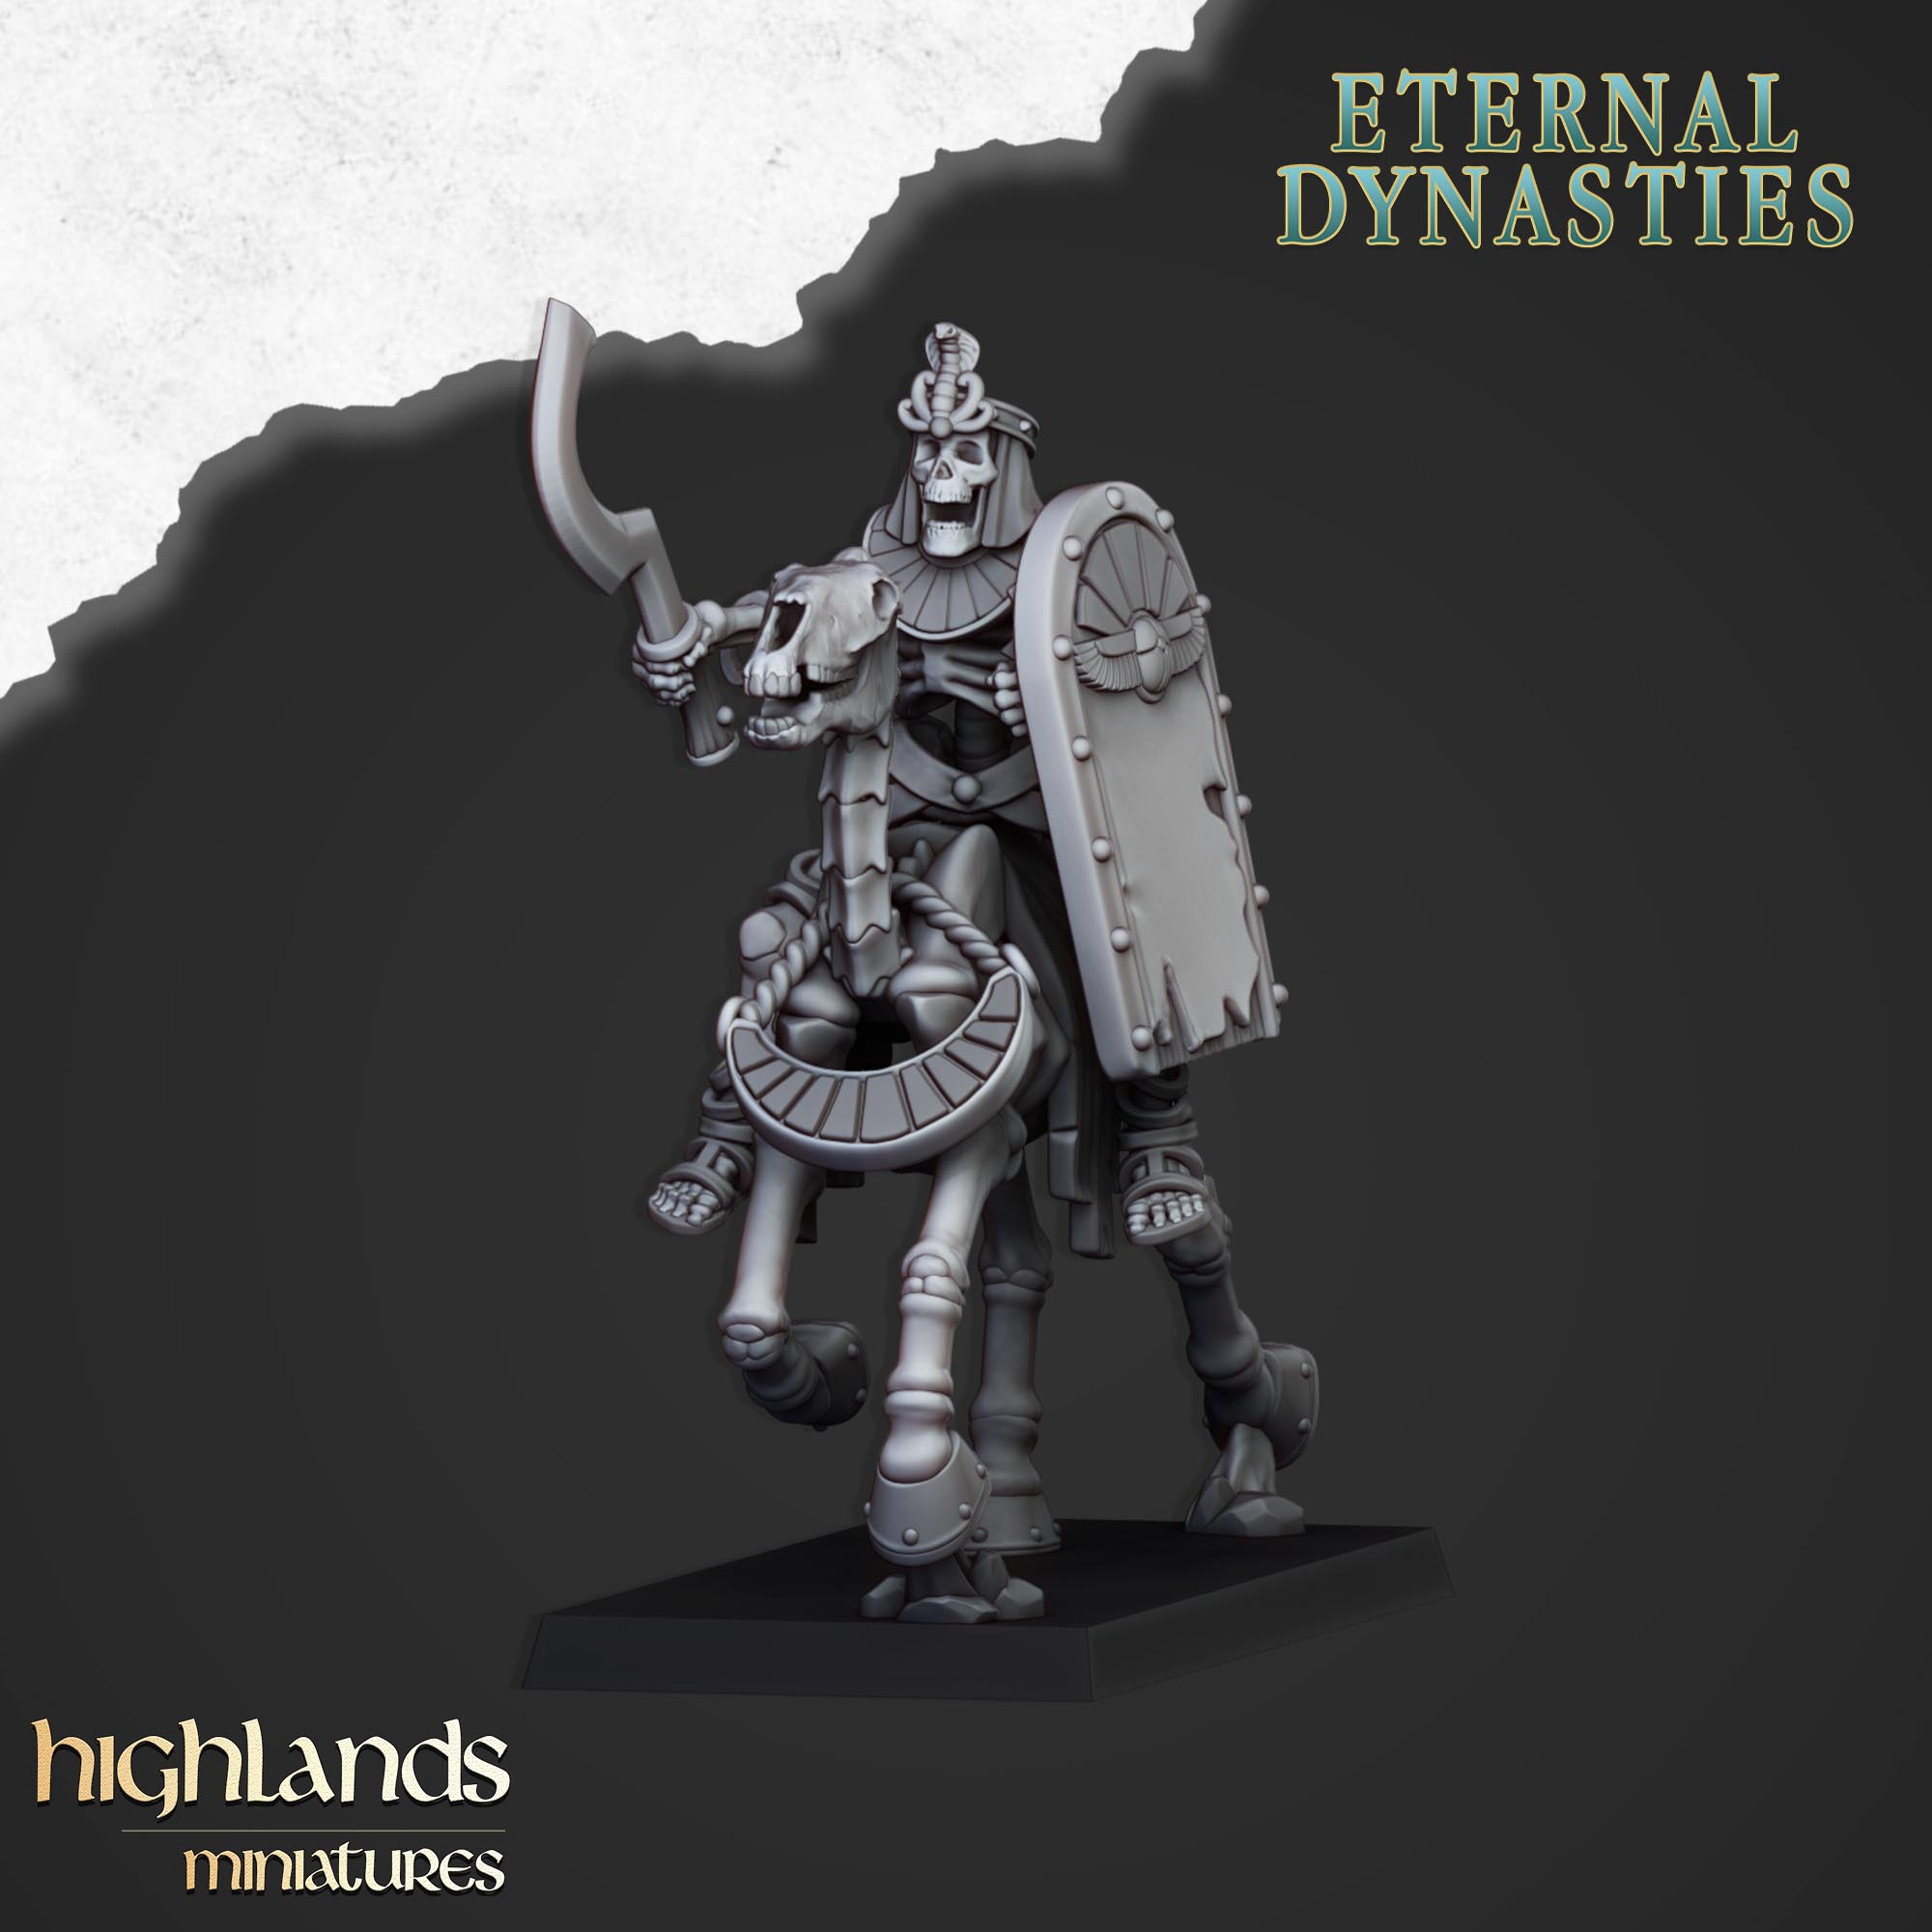 Antike Skelett-Kavalleriehauptleute (x2) - Ewige Dynastien | Highlands Miniatures